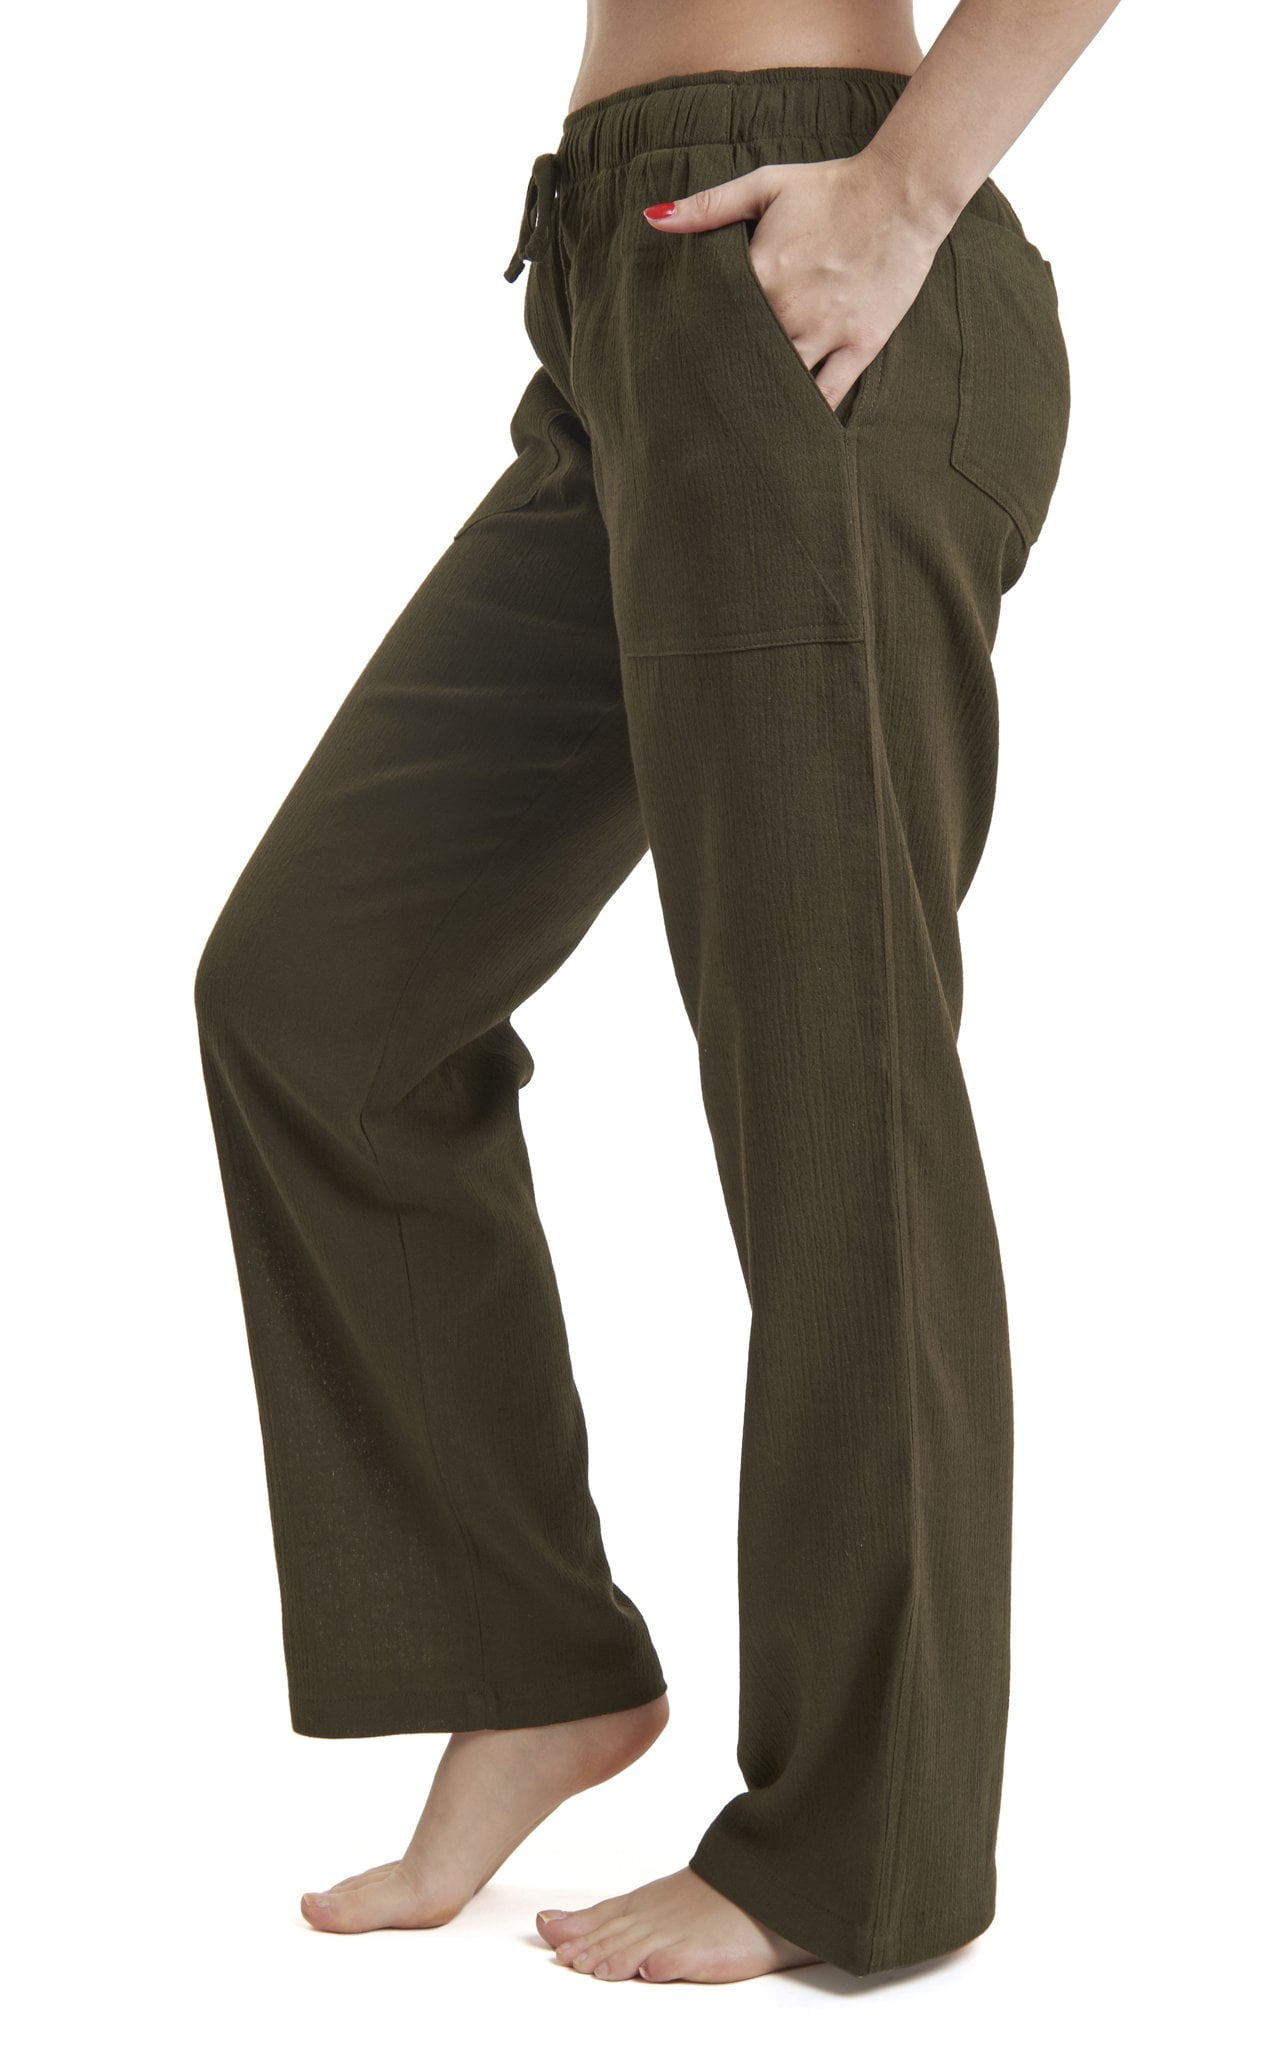 J & Ce Women's Gauze Cotton Beach Pants with Pockets (White, XL